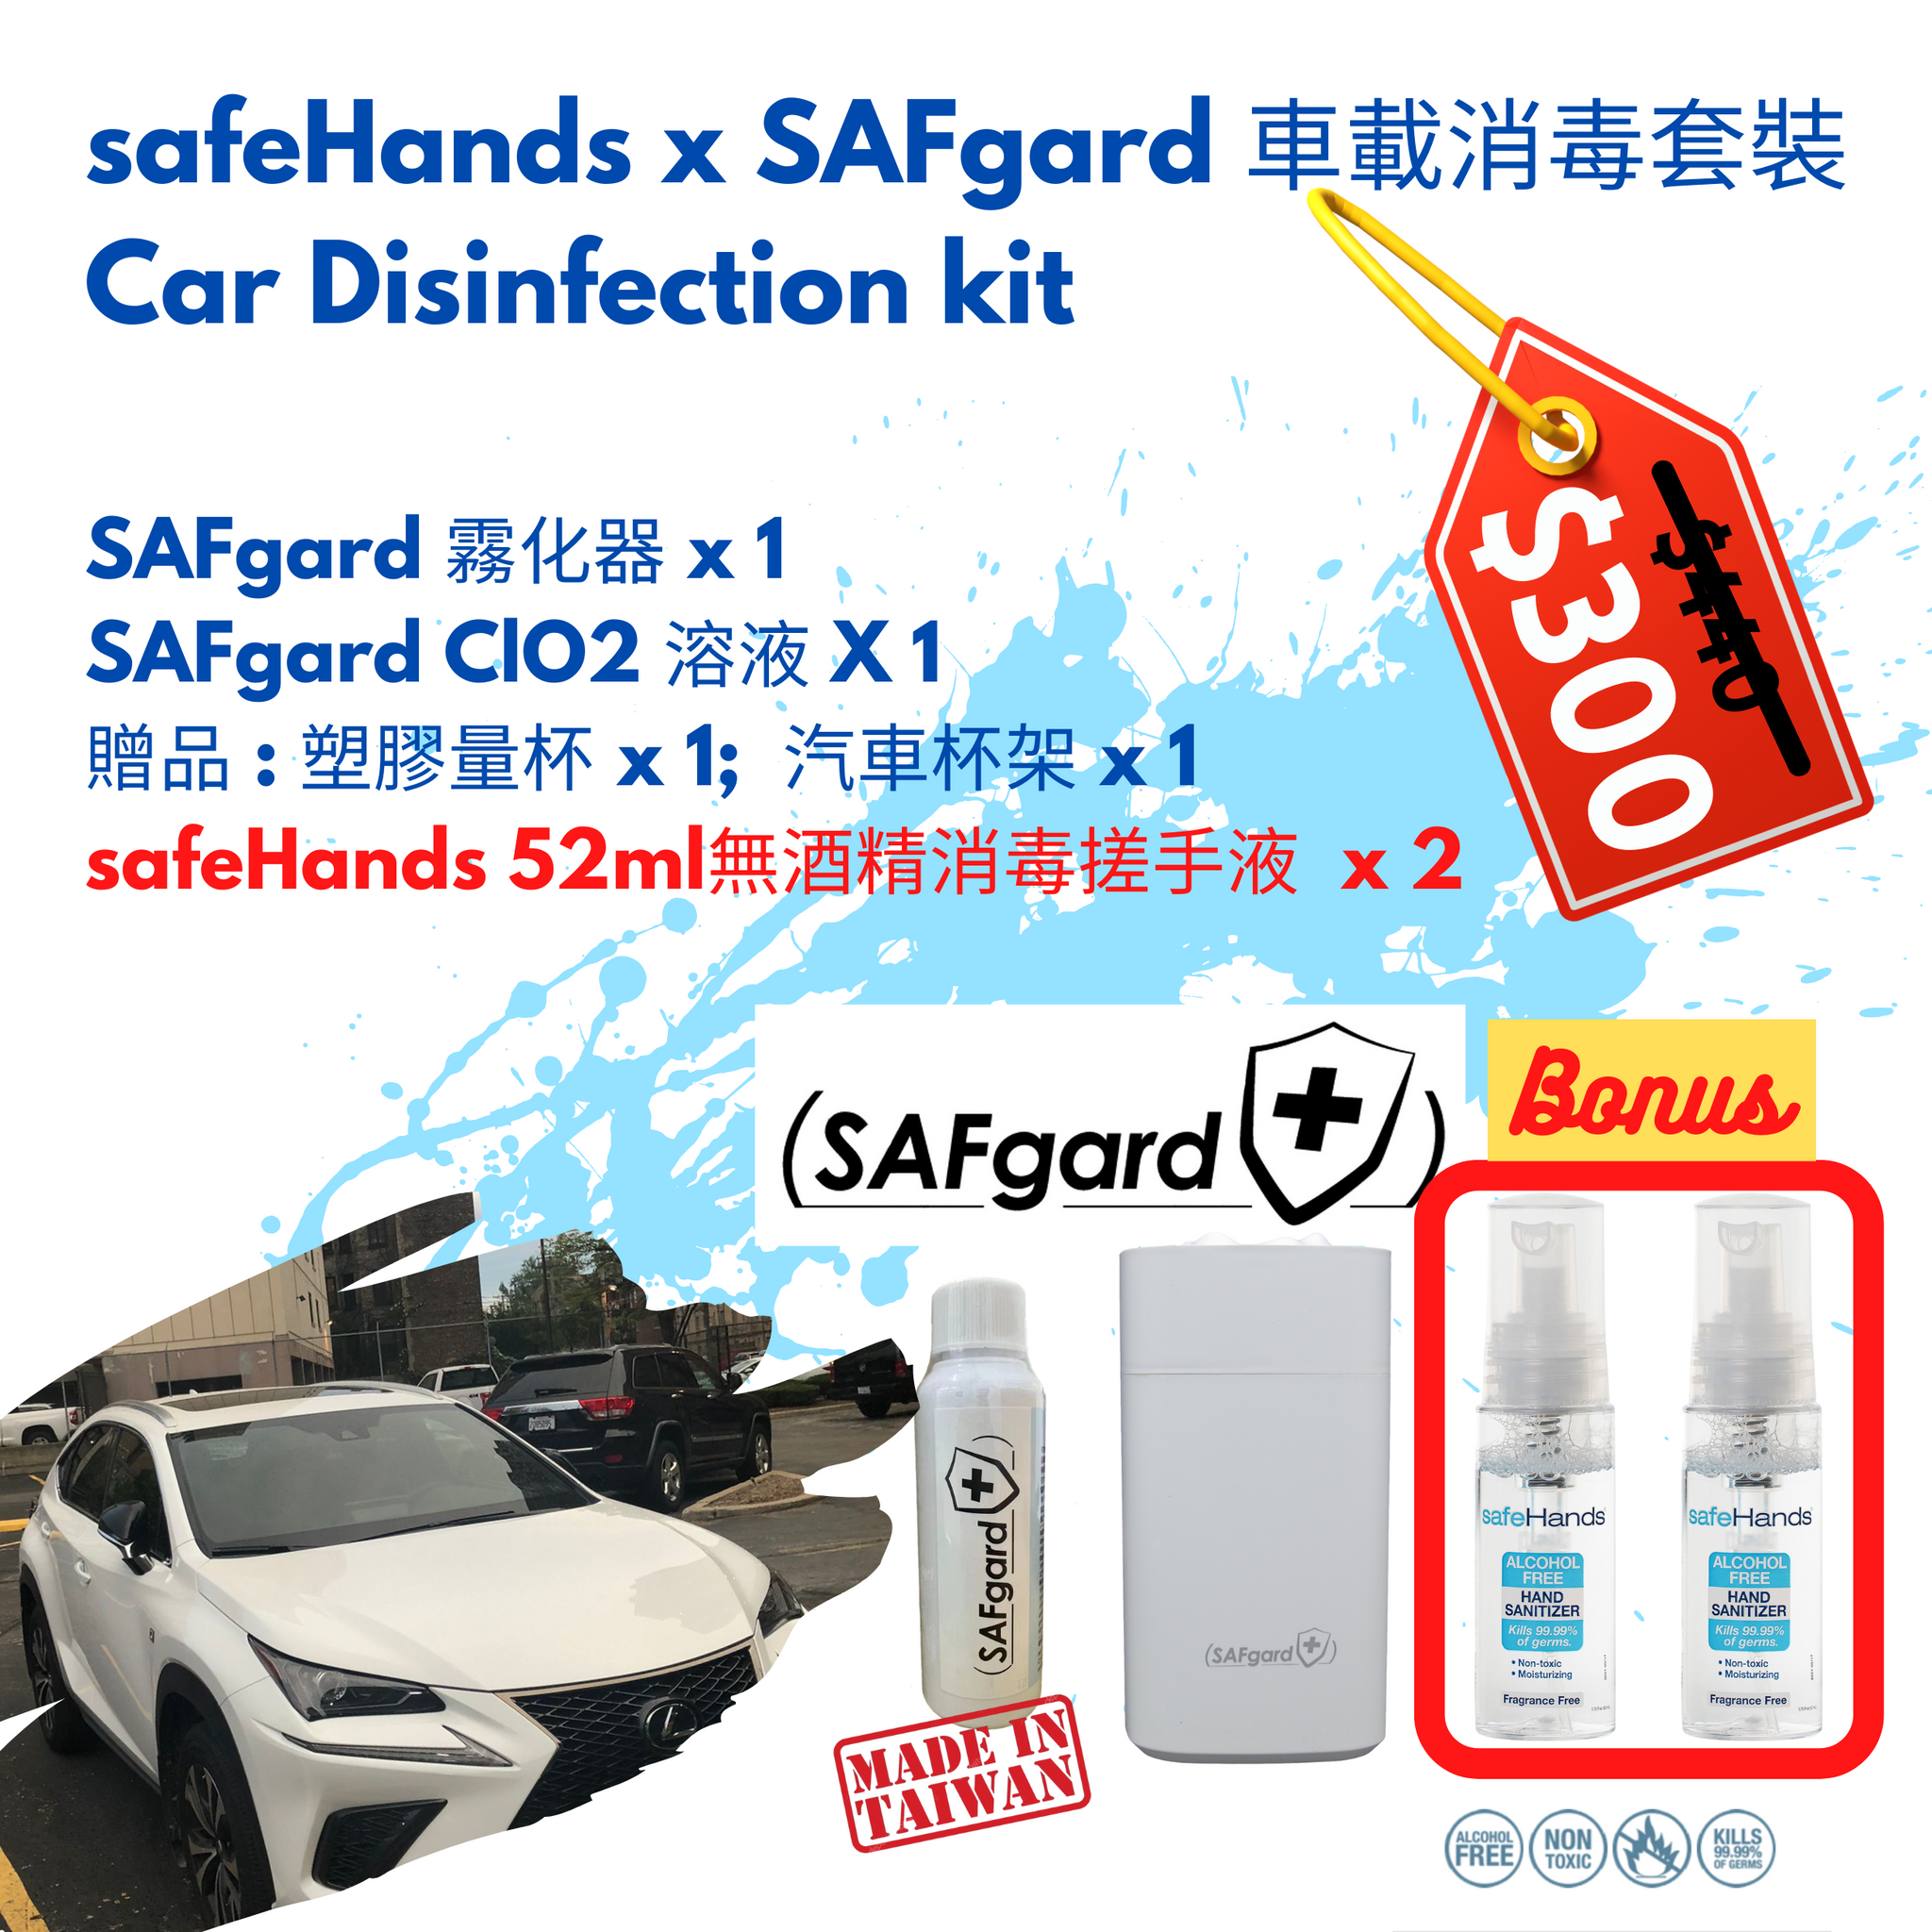 safeHands x SAFgard 汽車防疫套裝 Car Disinfection kit